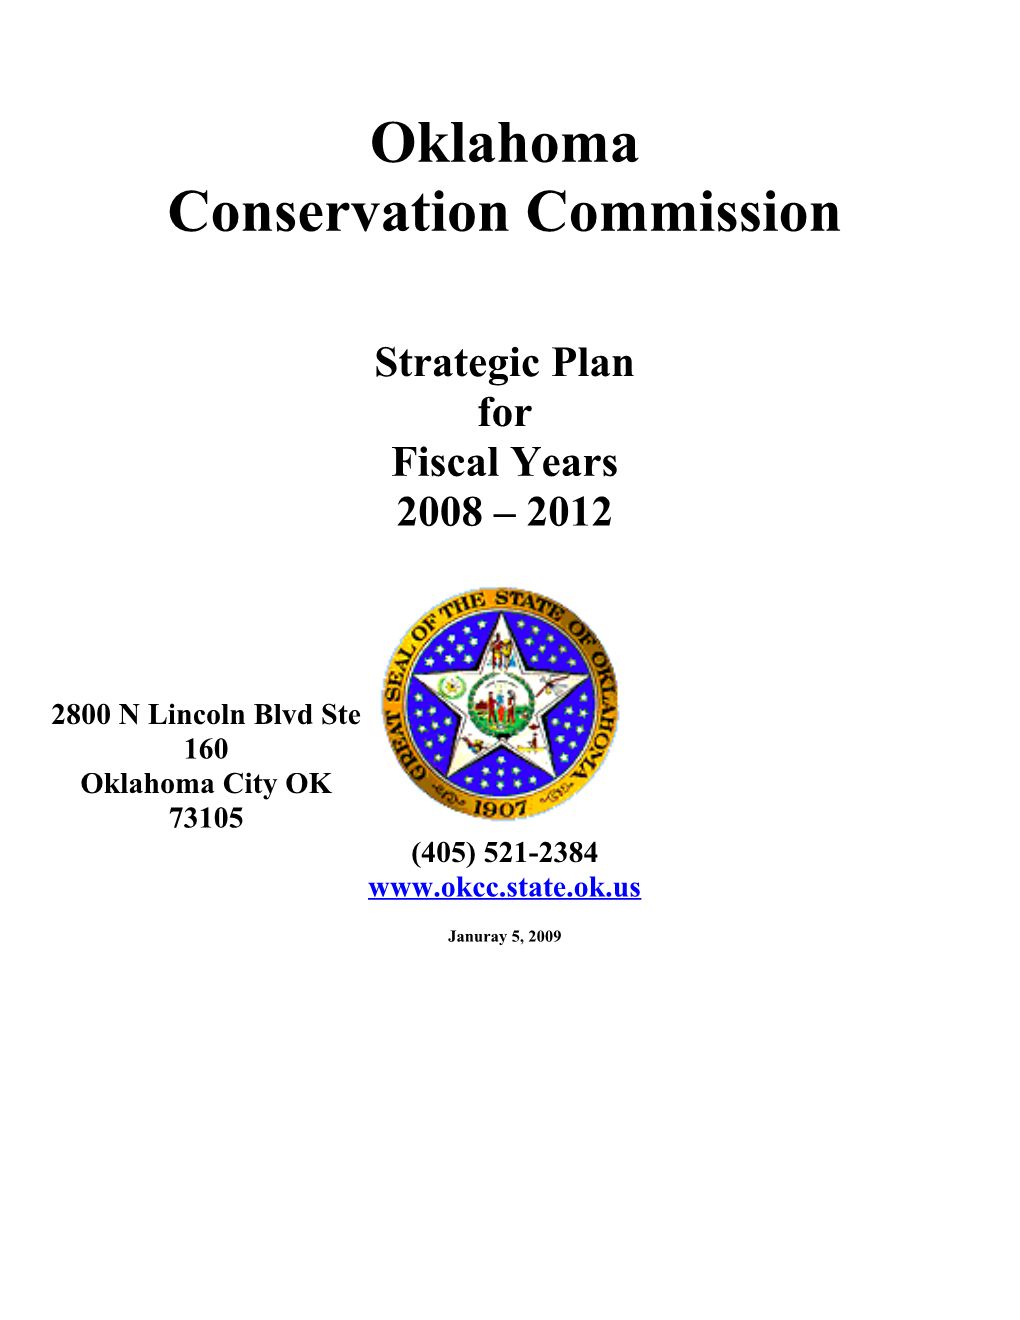 OCC Strategic Plan